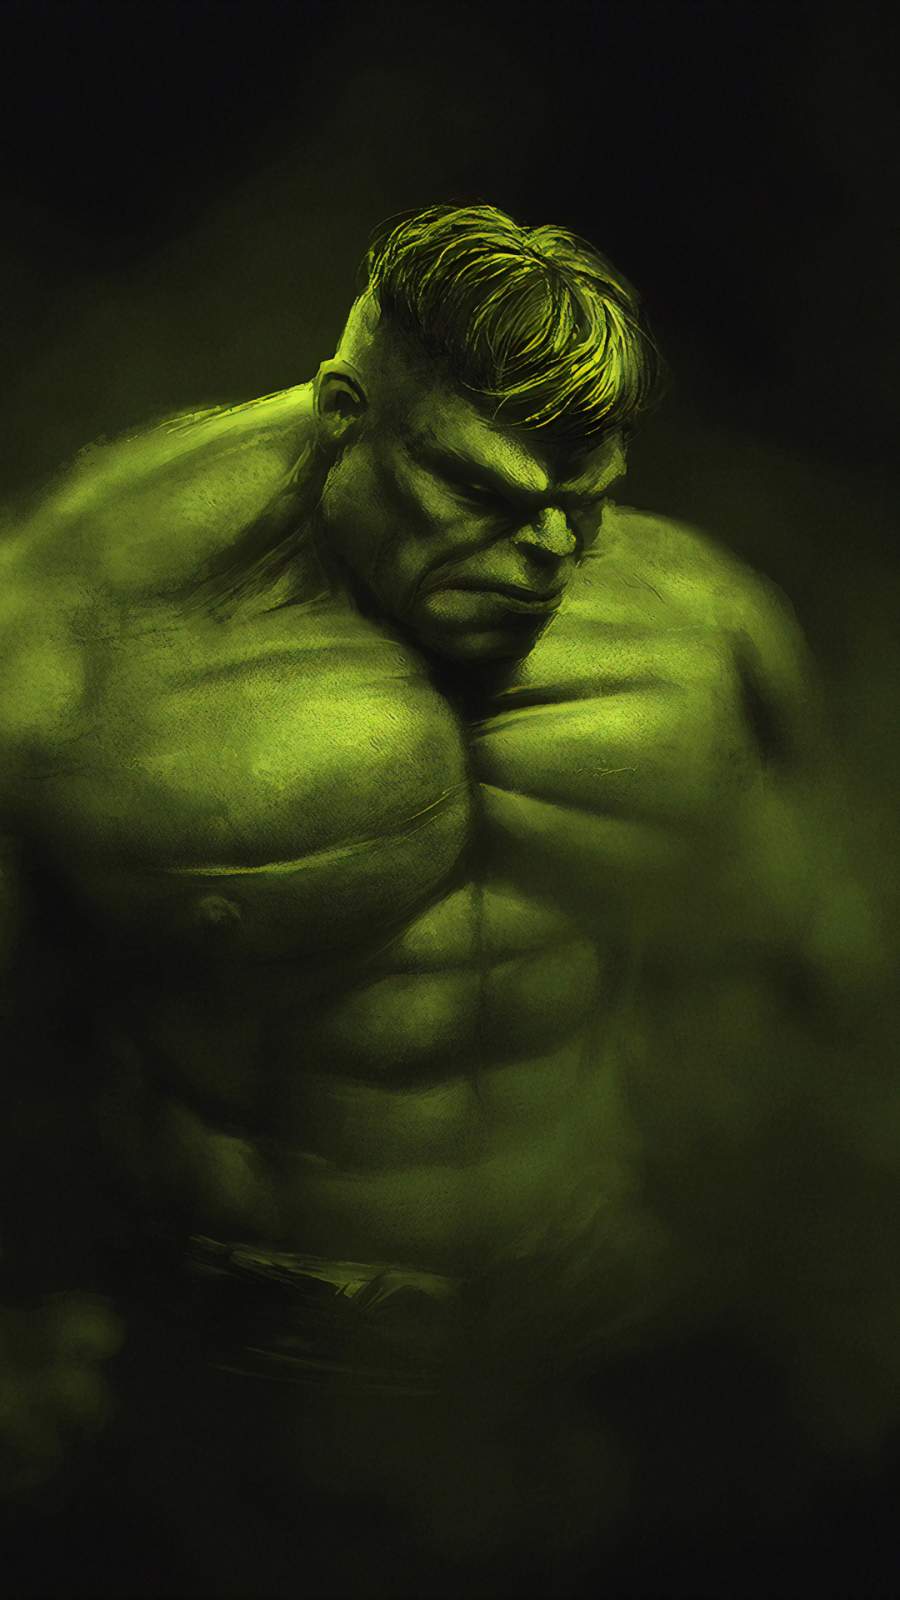 Wallpaper ID 75738  hulk superheroes hd 4k behance free download